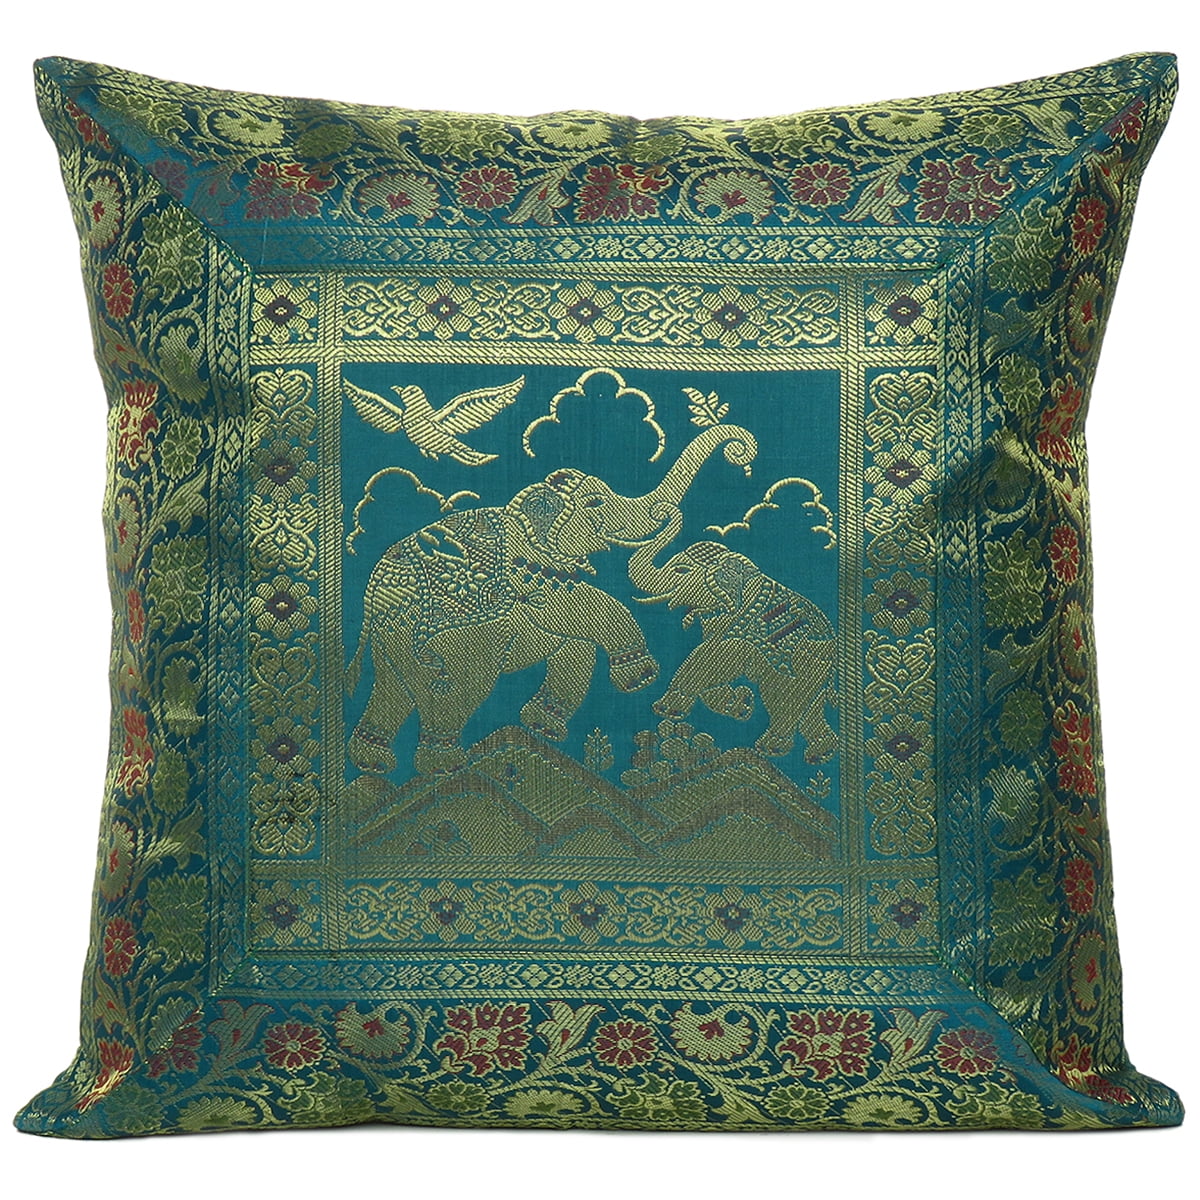 Decorative Square Throw Pillow Cover Elephant Print Silk Brocade Cushion Covers 